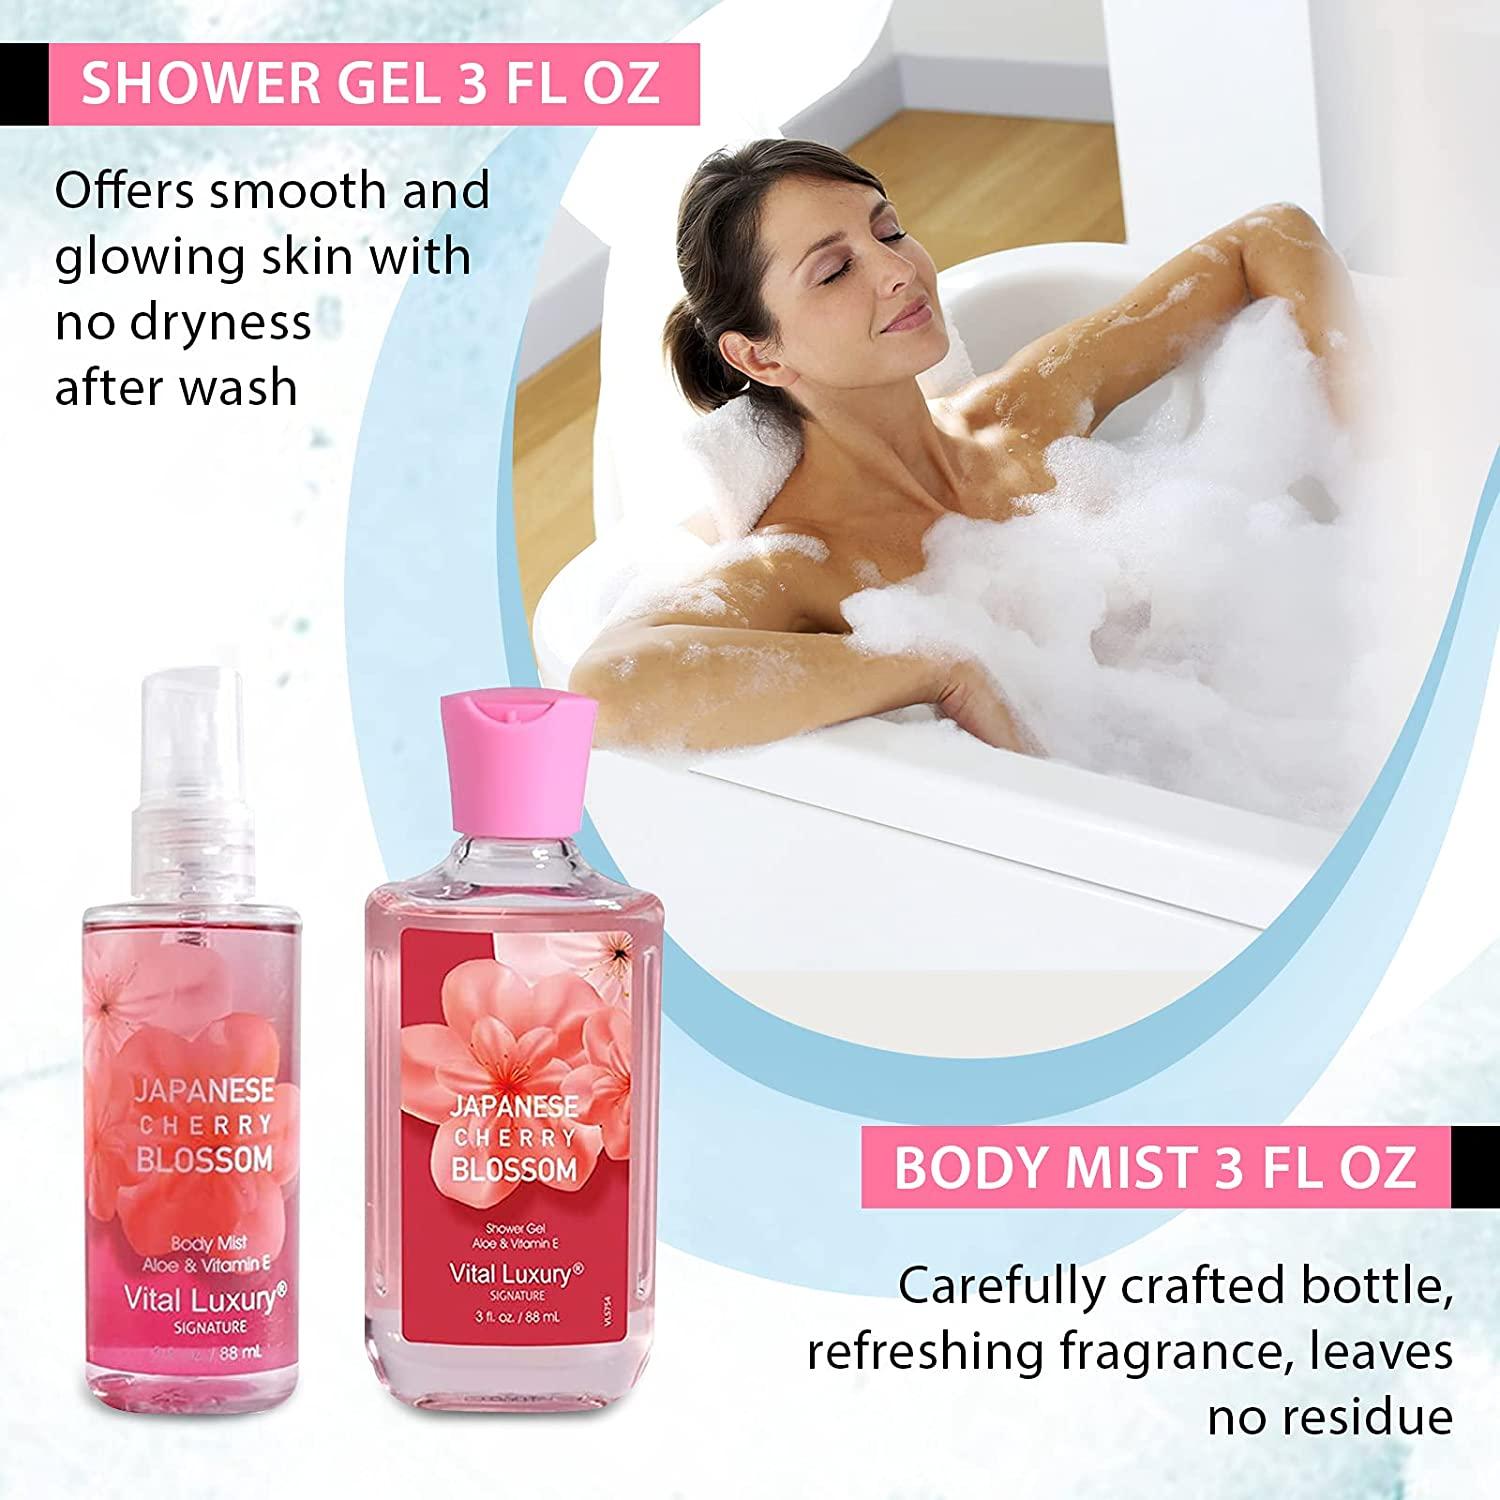 Vital Luxury Bath Body Kit 3 Fl Oz Ideal Skincare Gift Home Spa